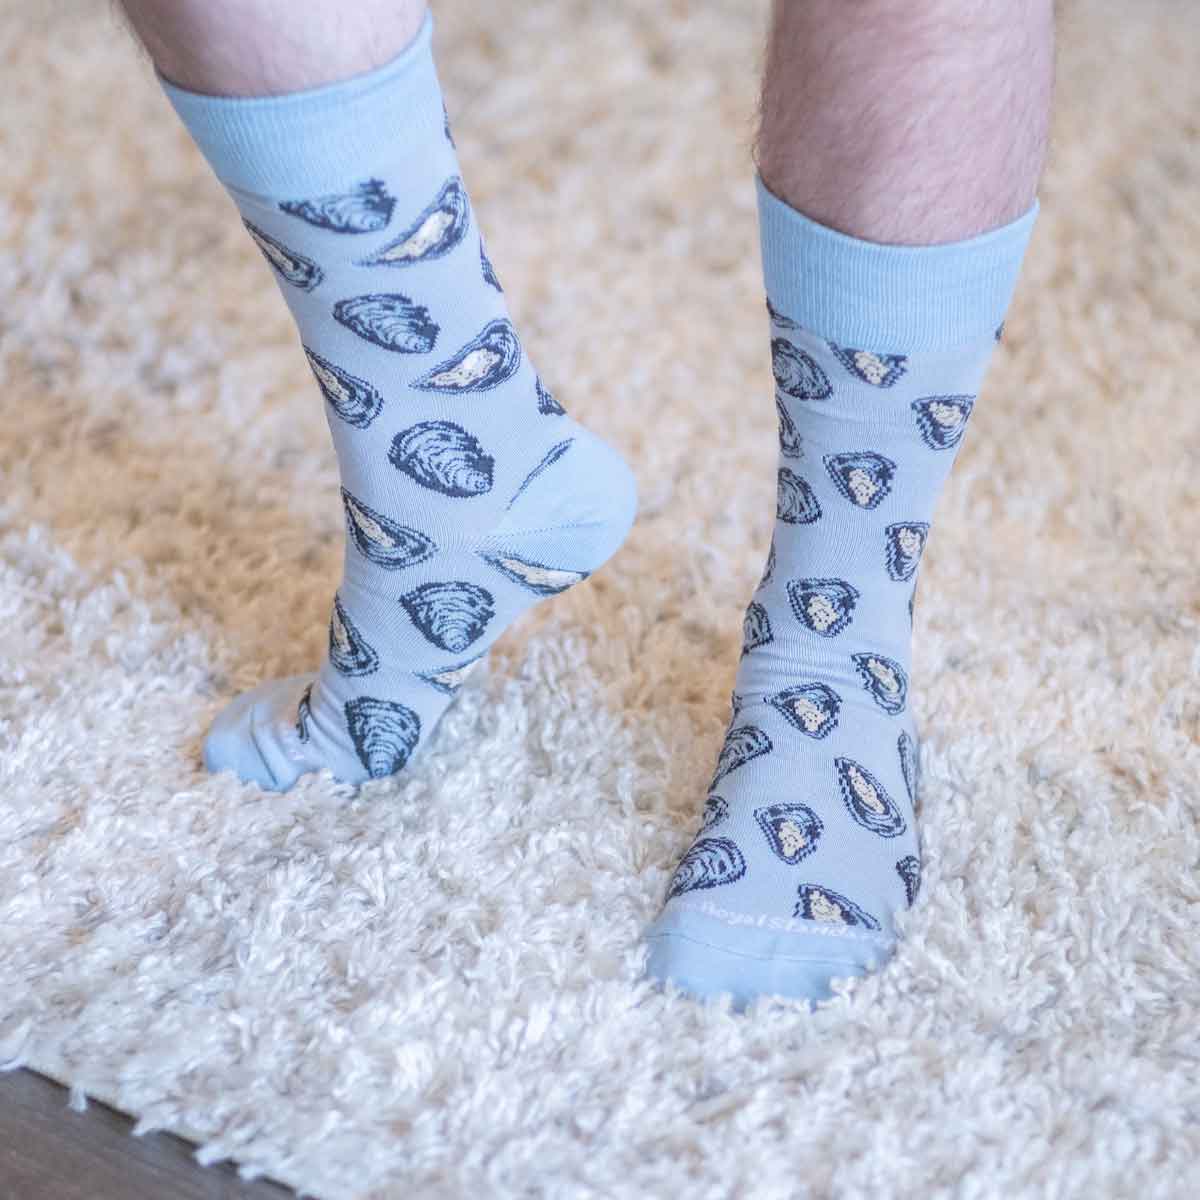 Men's Oyster Socks   Blue/Gray   One Size